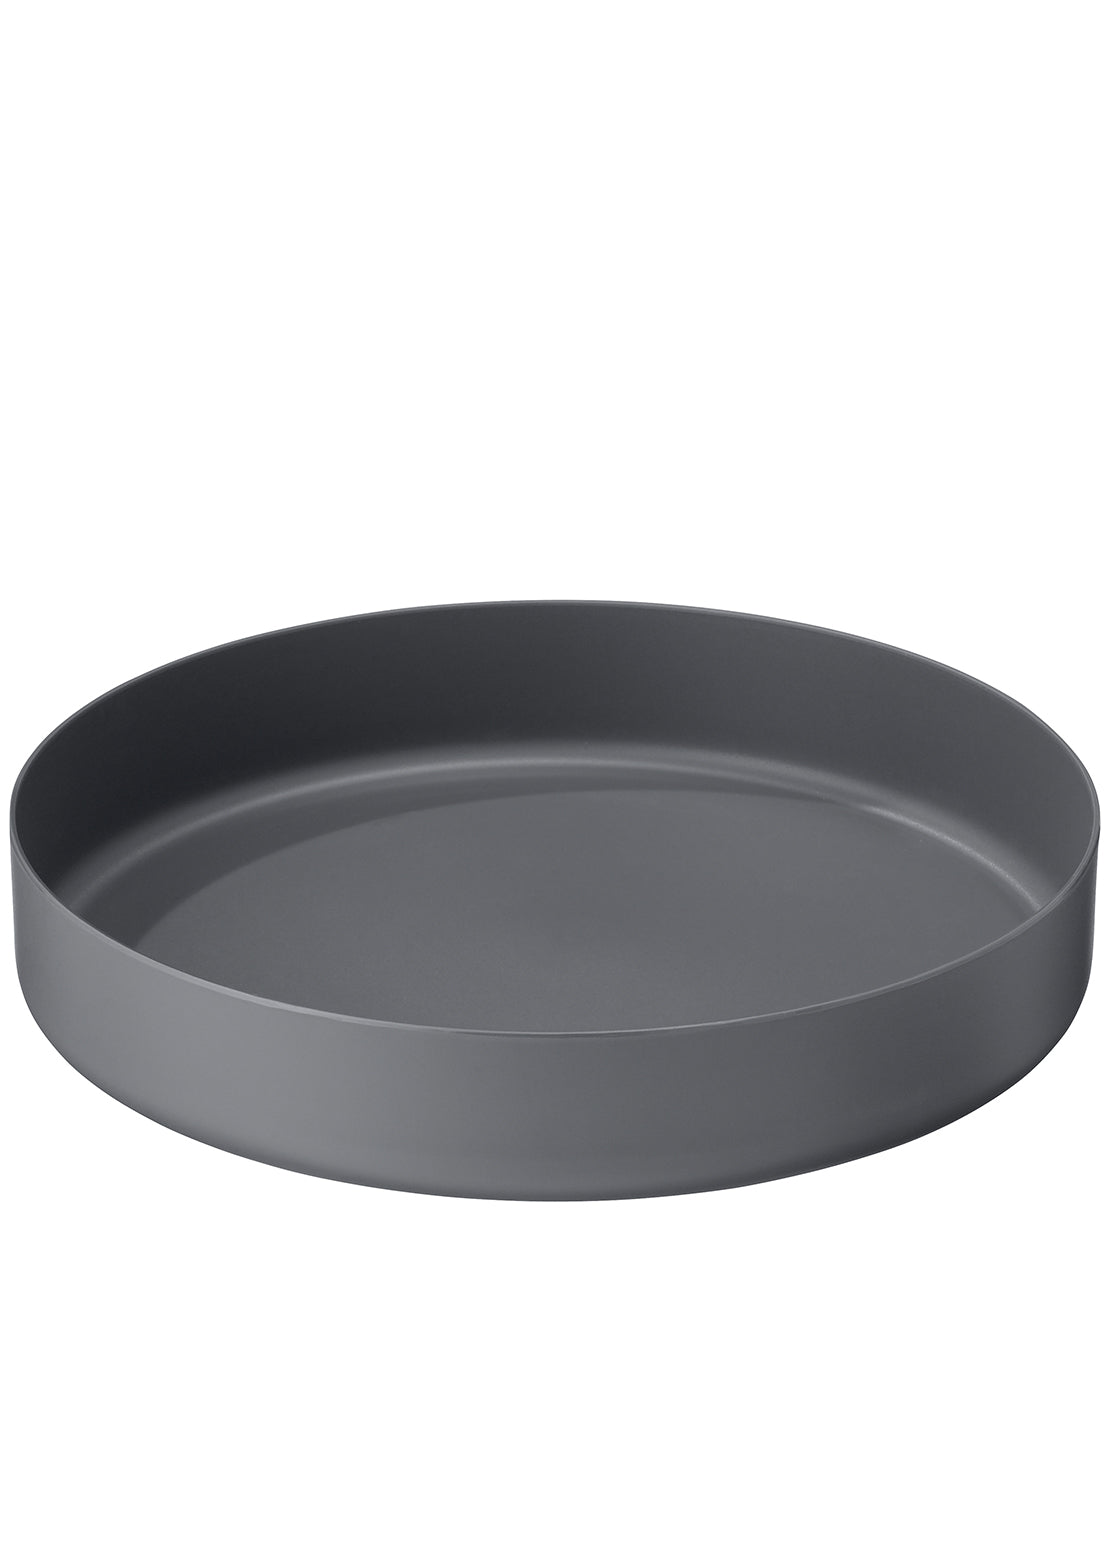 MSR Deep Dish Plate - Large Gray